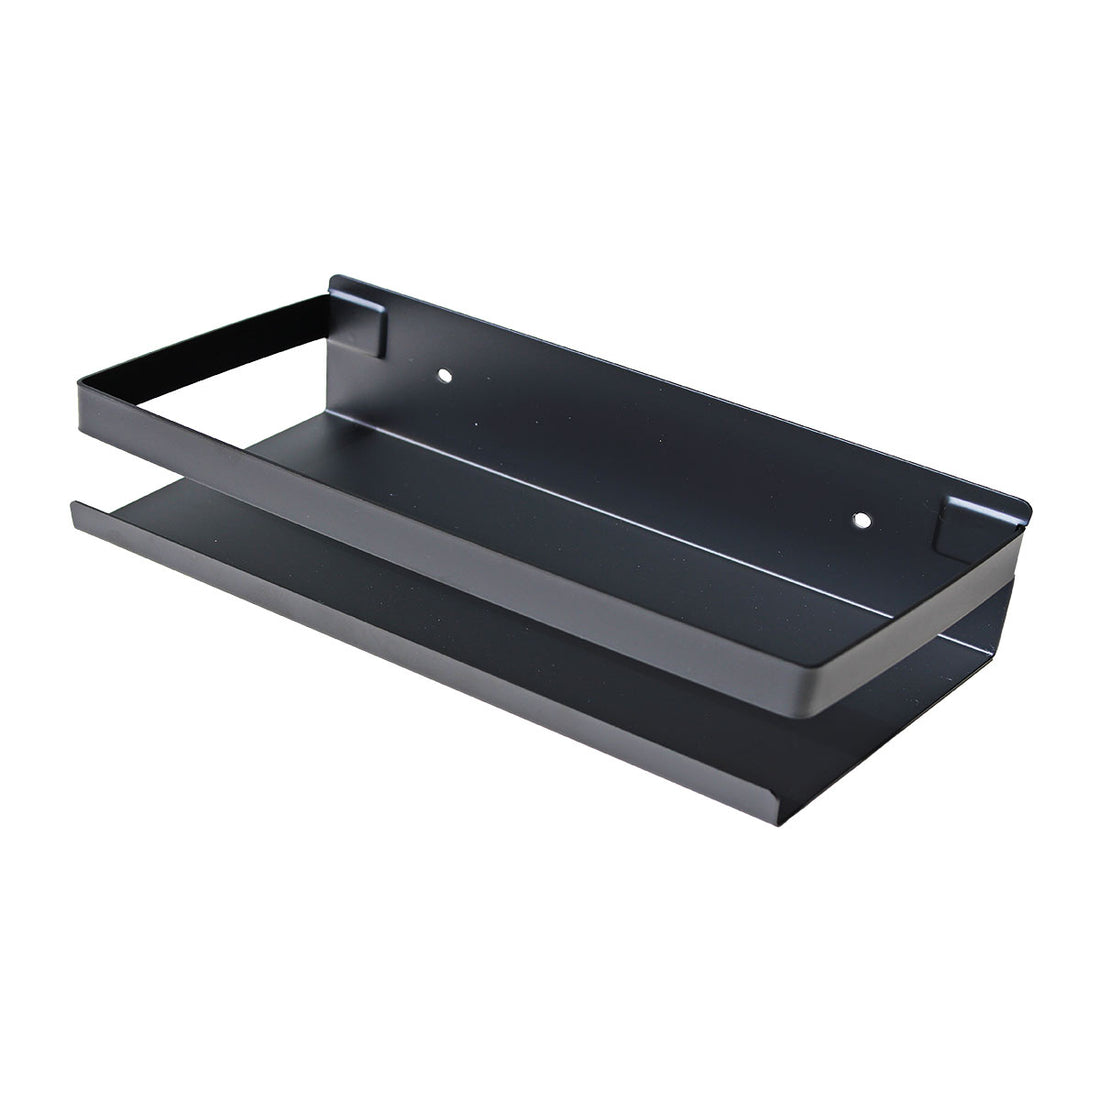 Bath shelf for bathroom - black - 30 cm